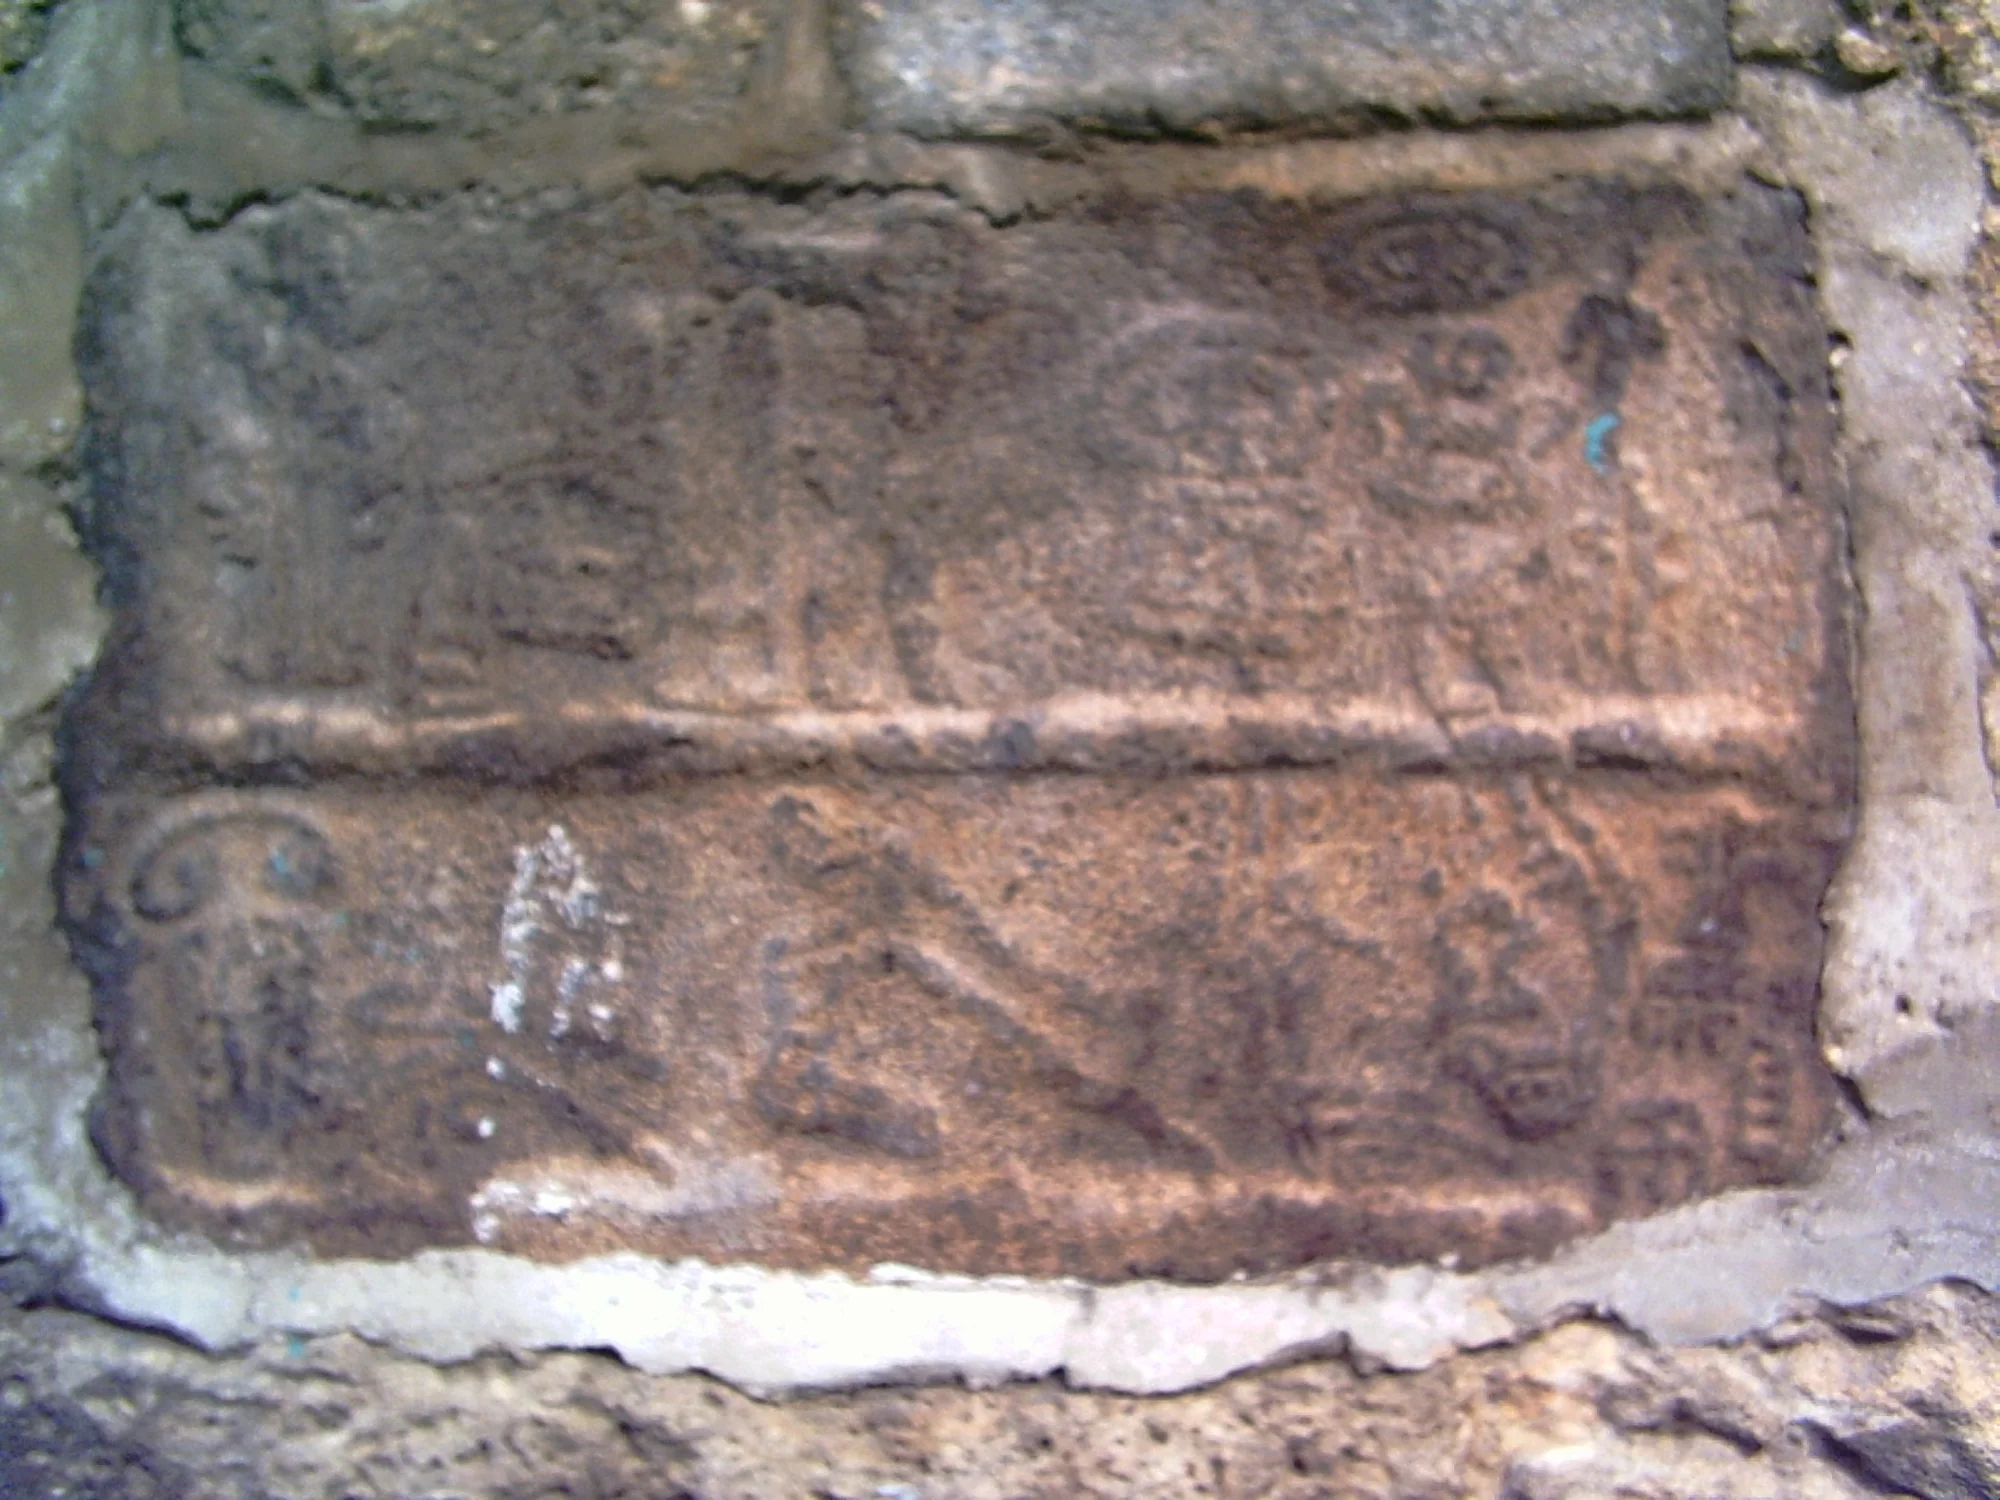 Jamiʿ al-Qayqan, Stone engraving - hieroglyphic pictorial writing